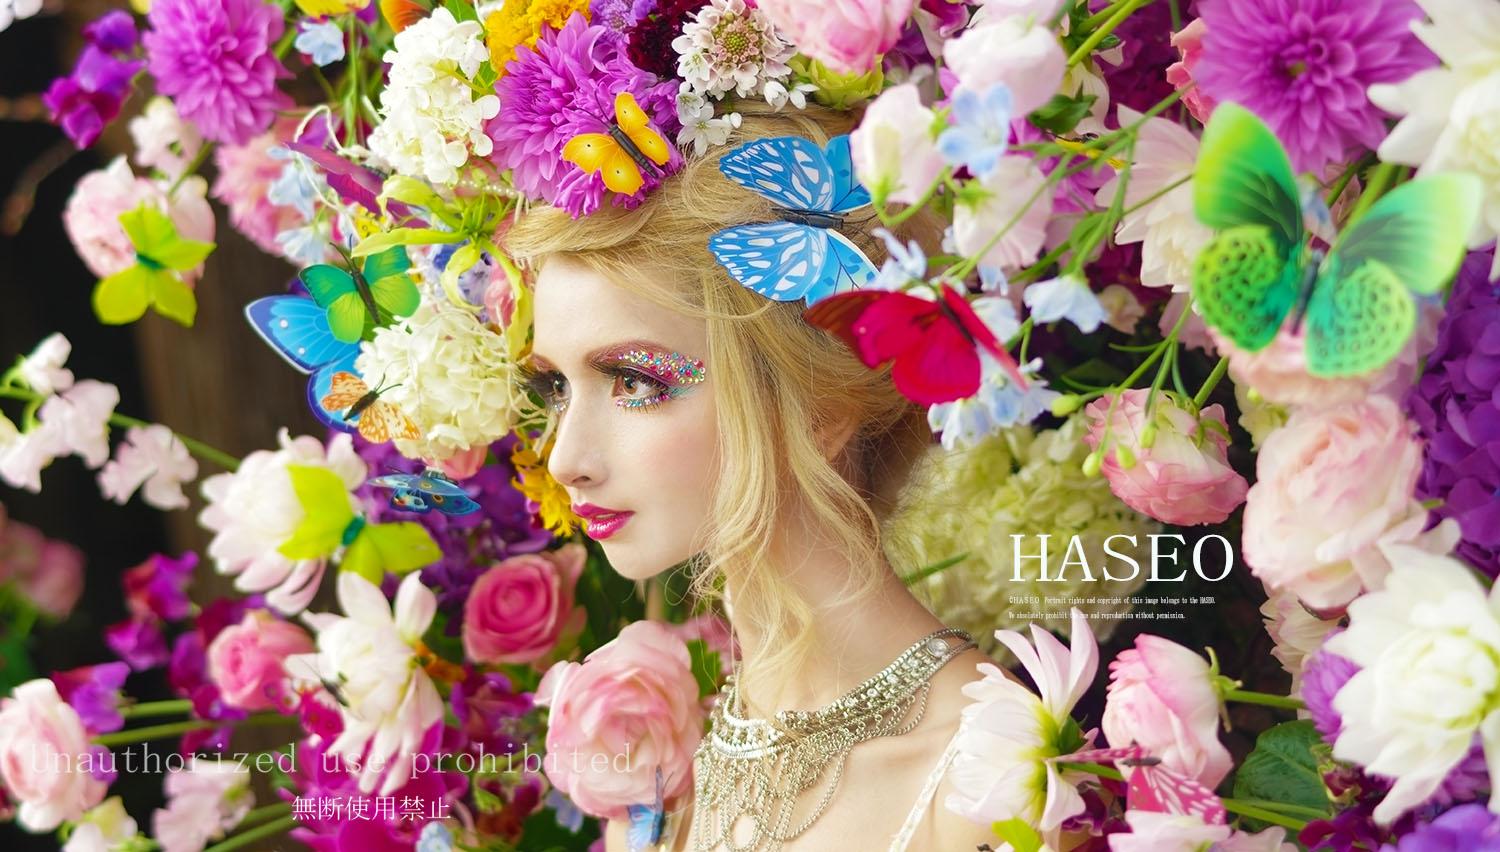 Haseo 闇の王 モデルはケシア姫 ヘアーメイクは 関るバーグ 花は 則武さんです Http T Co Yd3dn6hp1h